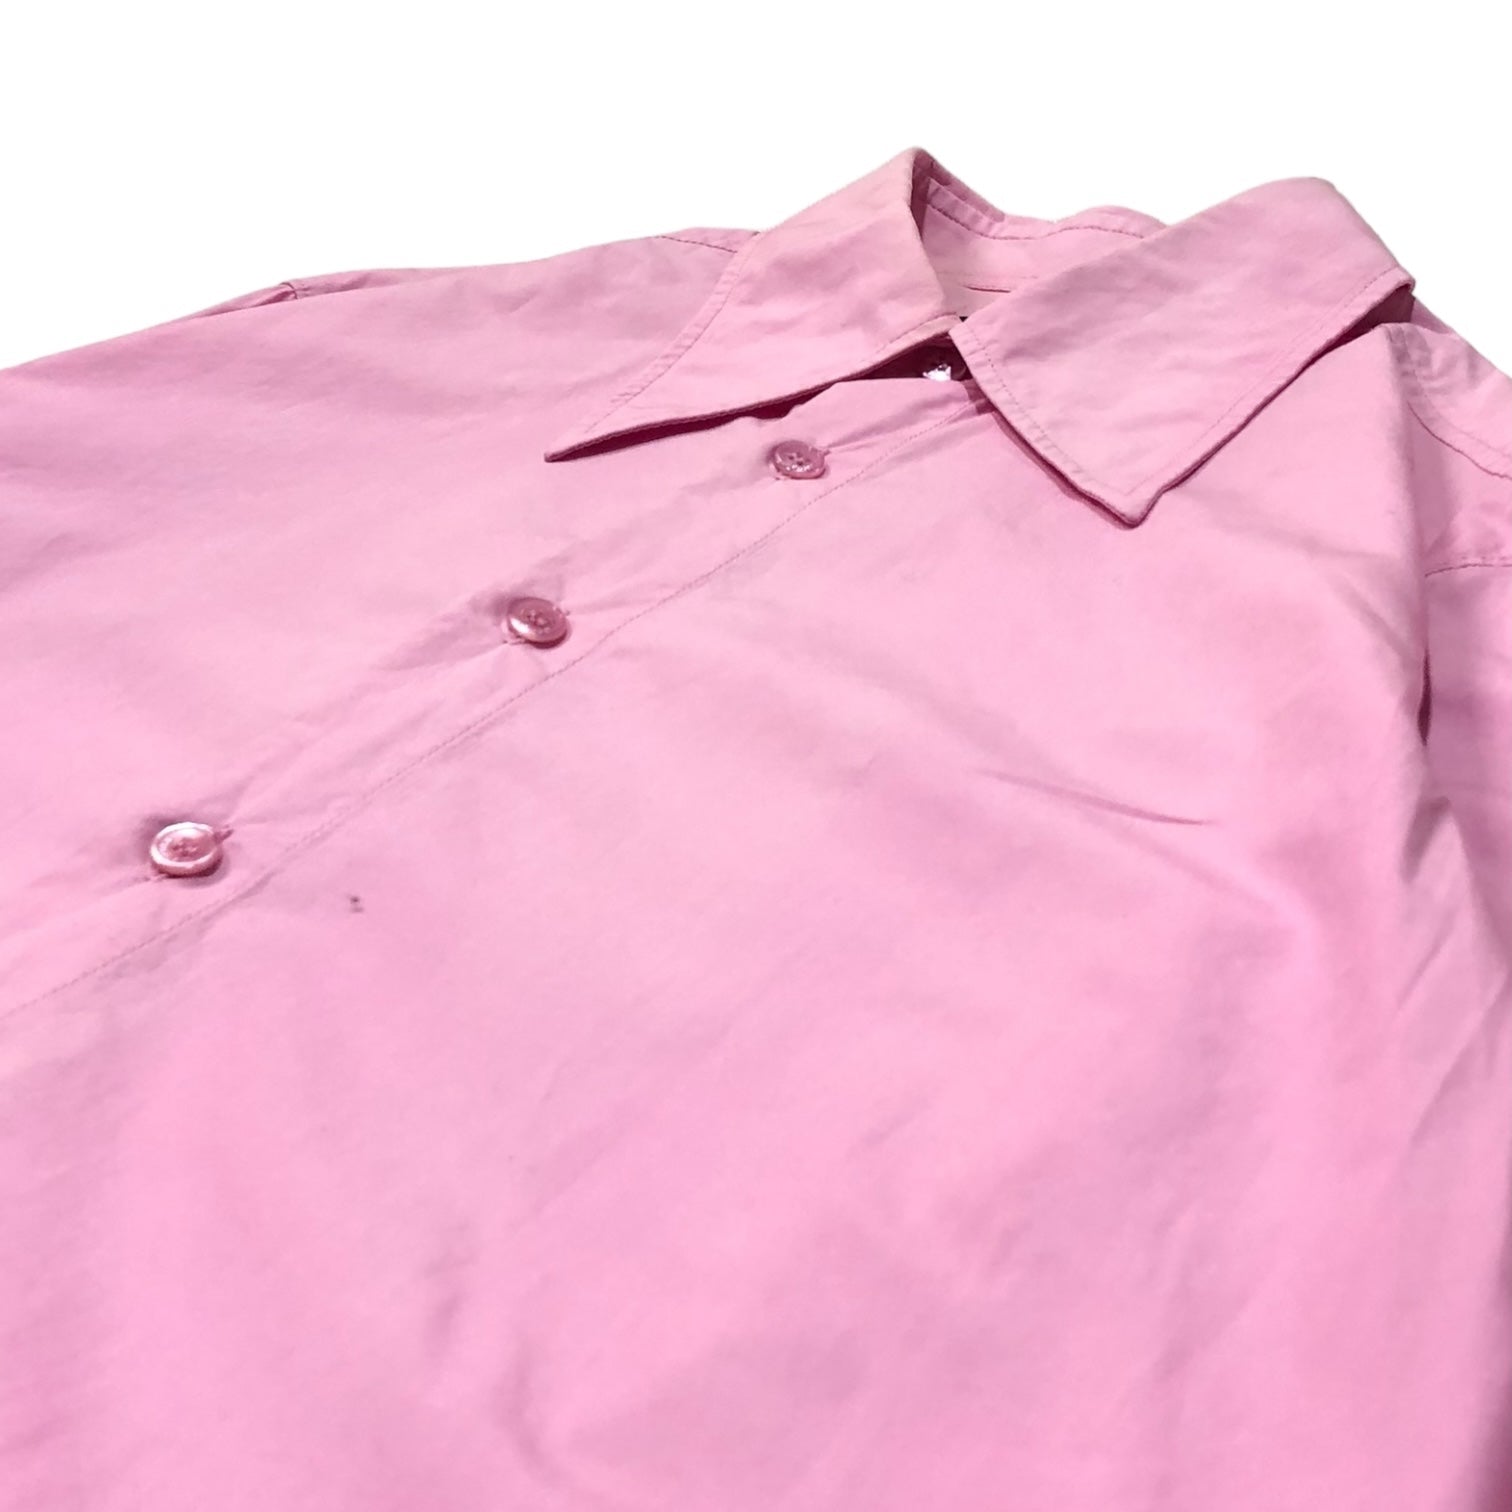 RAF SIMONS(ラフシモンズ) super long sleeve shirt スーパー ロングスリーブ シャツ 44(S程度) ピンク 長袖 Rロゴ 刺繍 アーカイブ